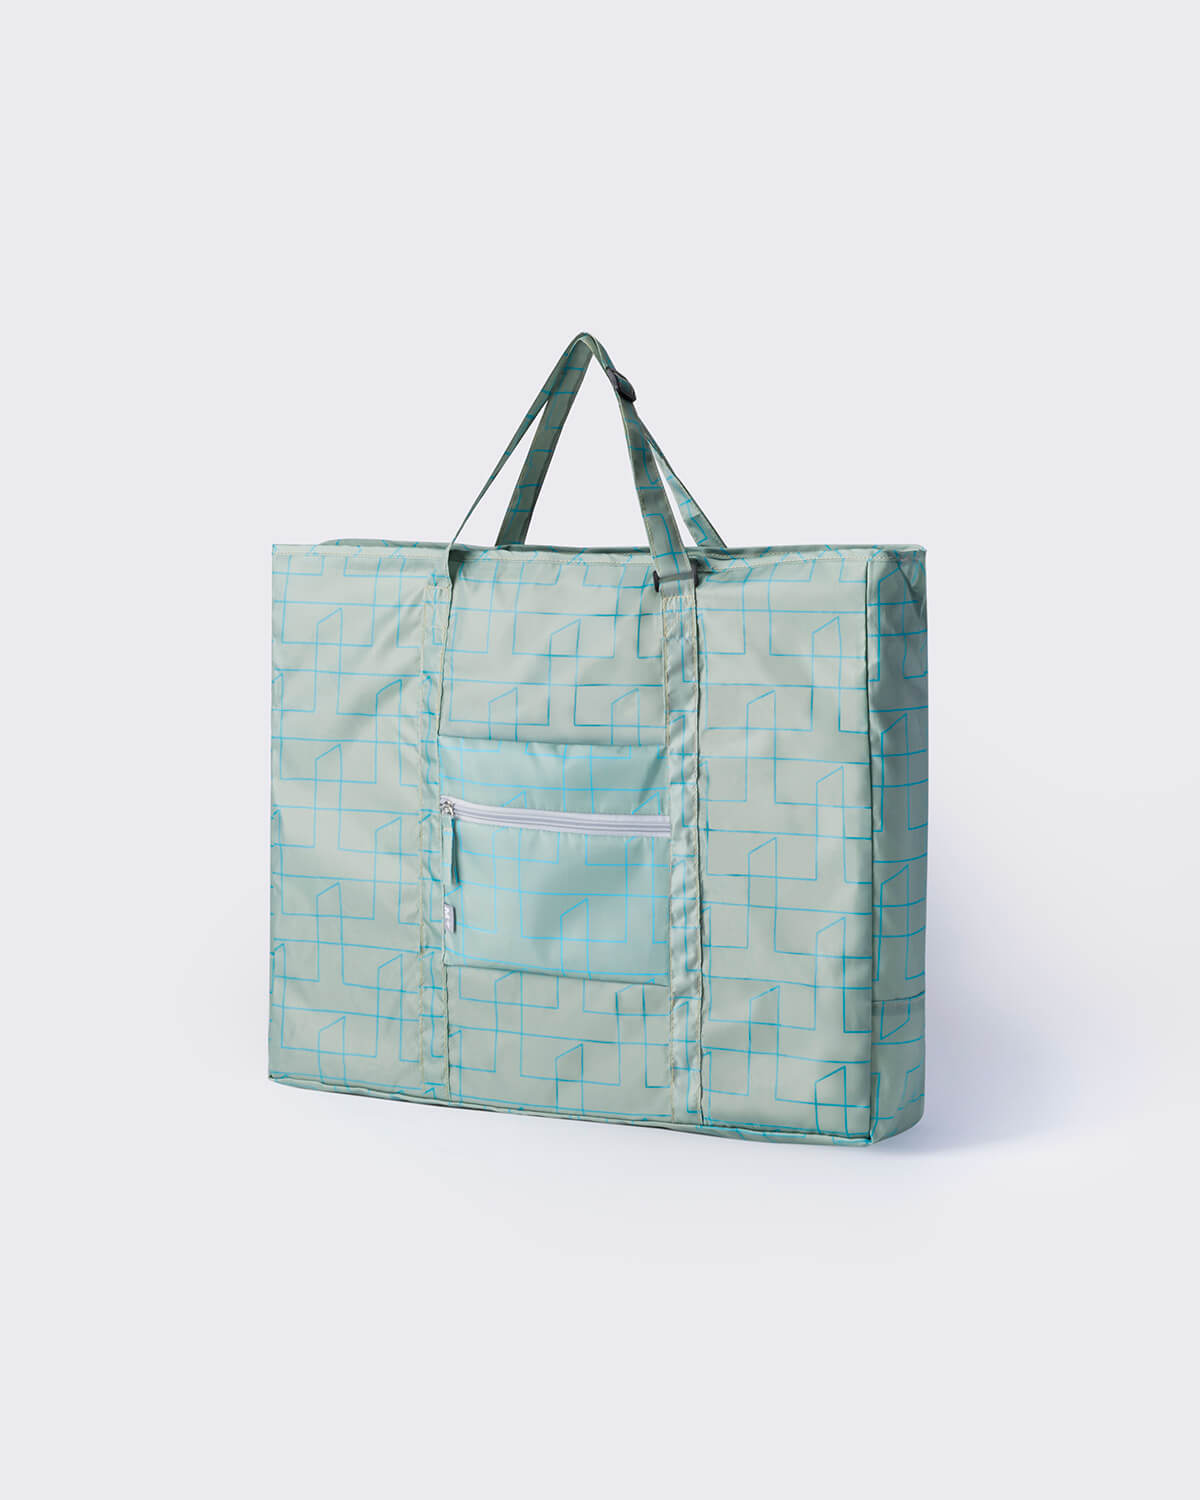 M+ 幾何可摺式旅行袋